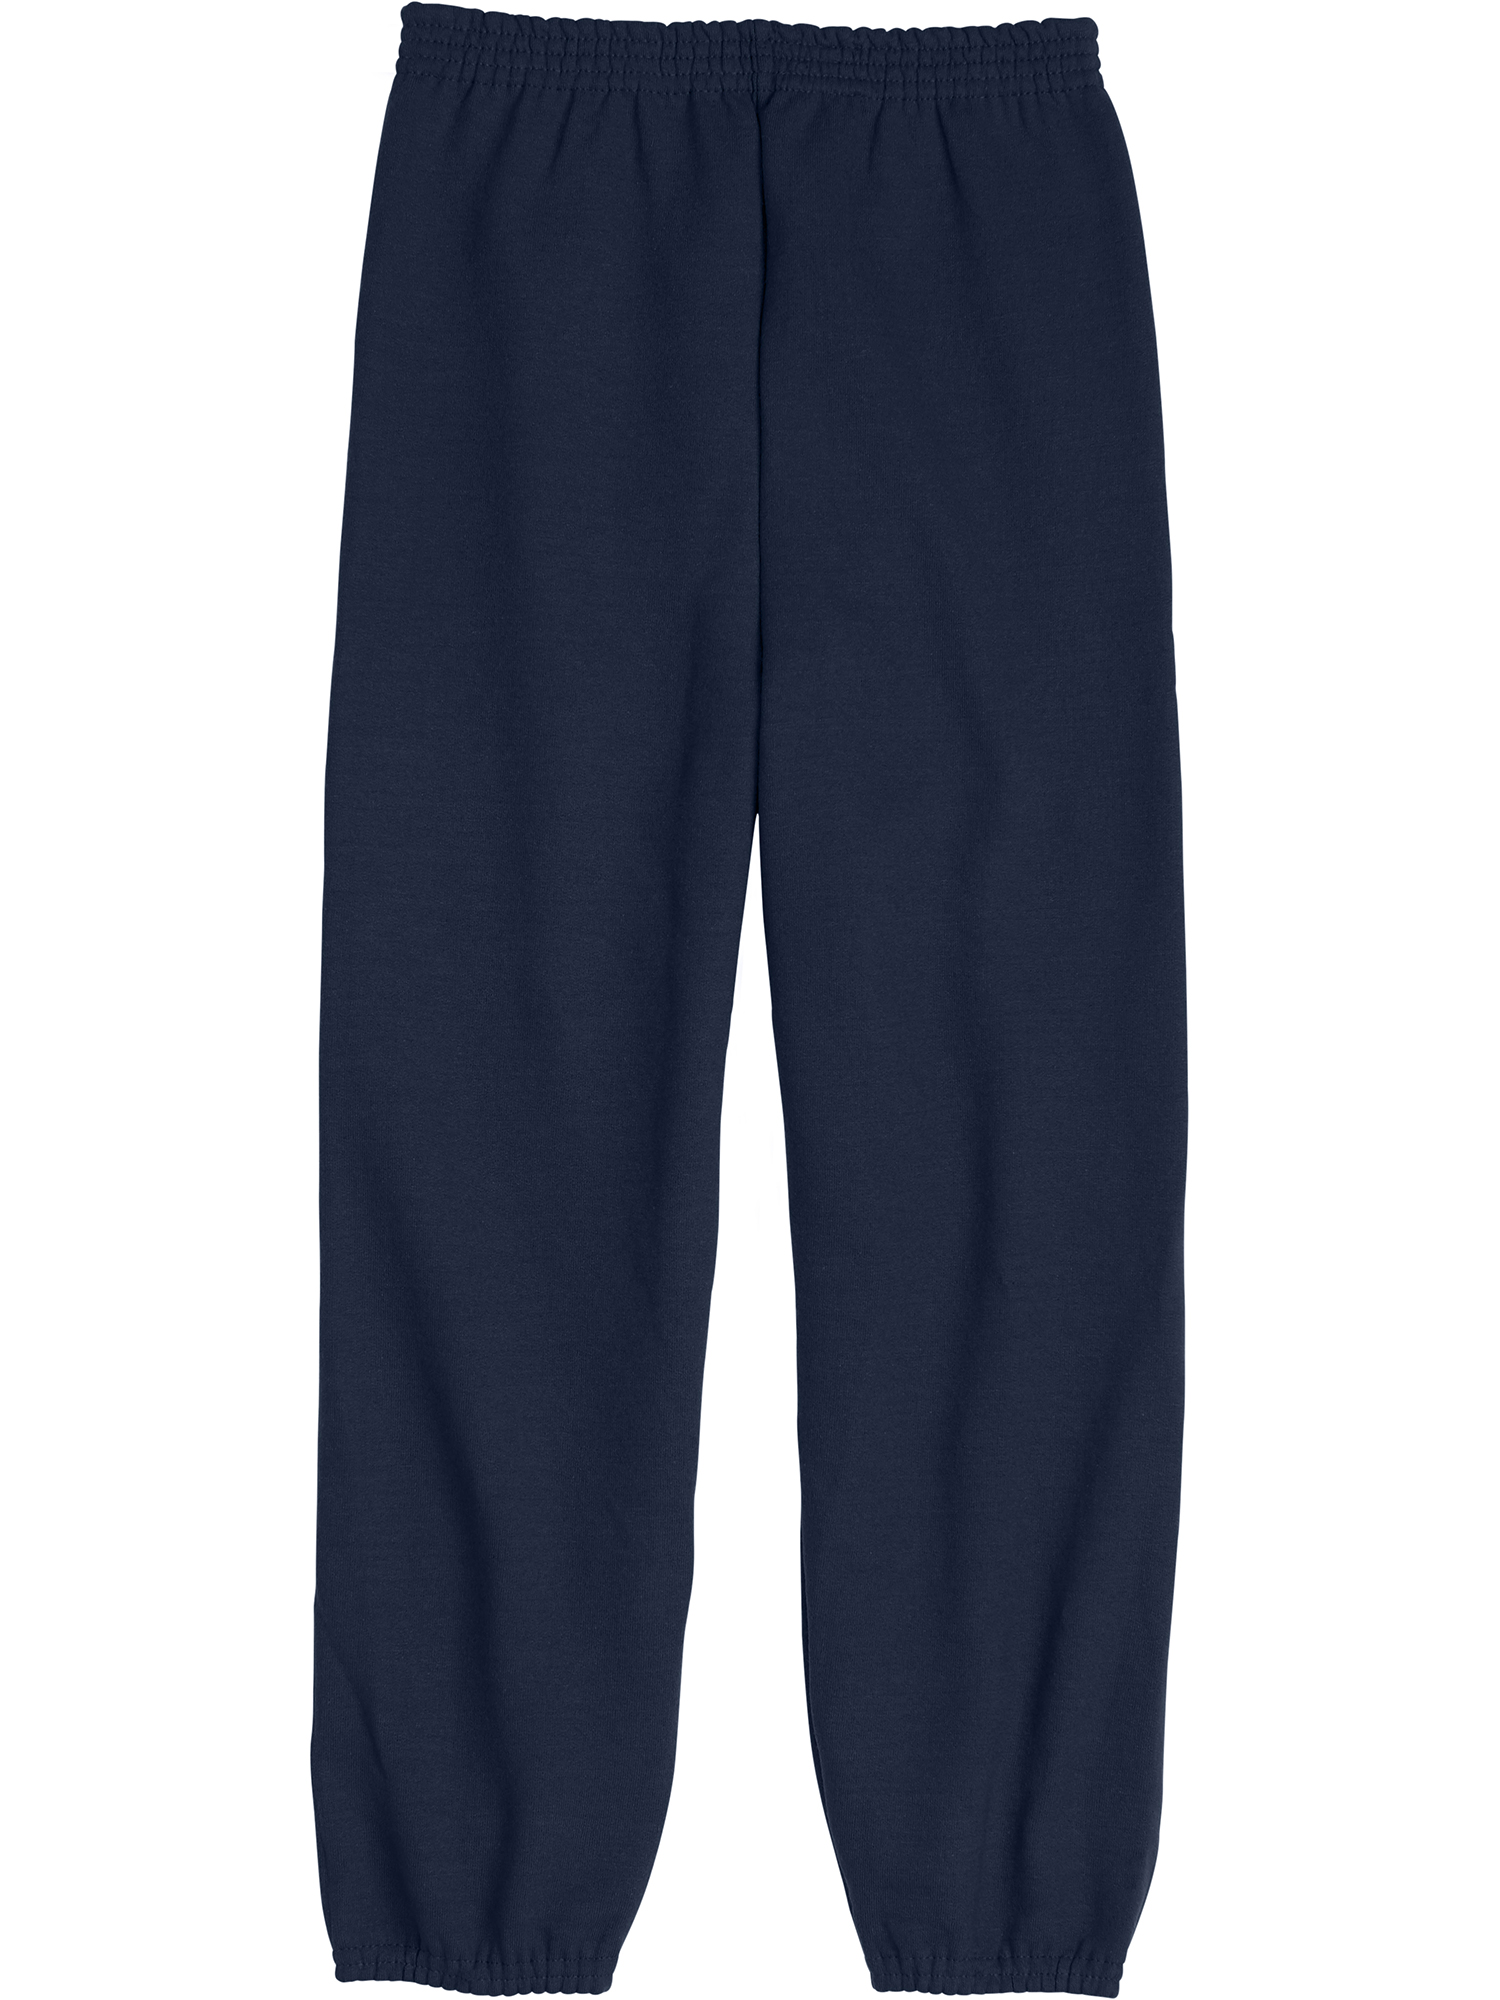 Hanes Boys EcoSmart Active Fleece Sweatpant, Sizes XS-XL - image 2 of 5